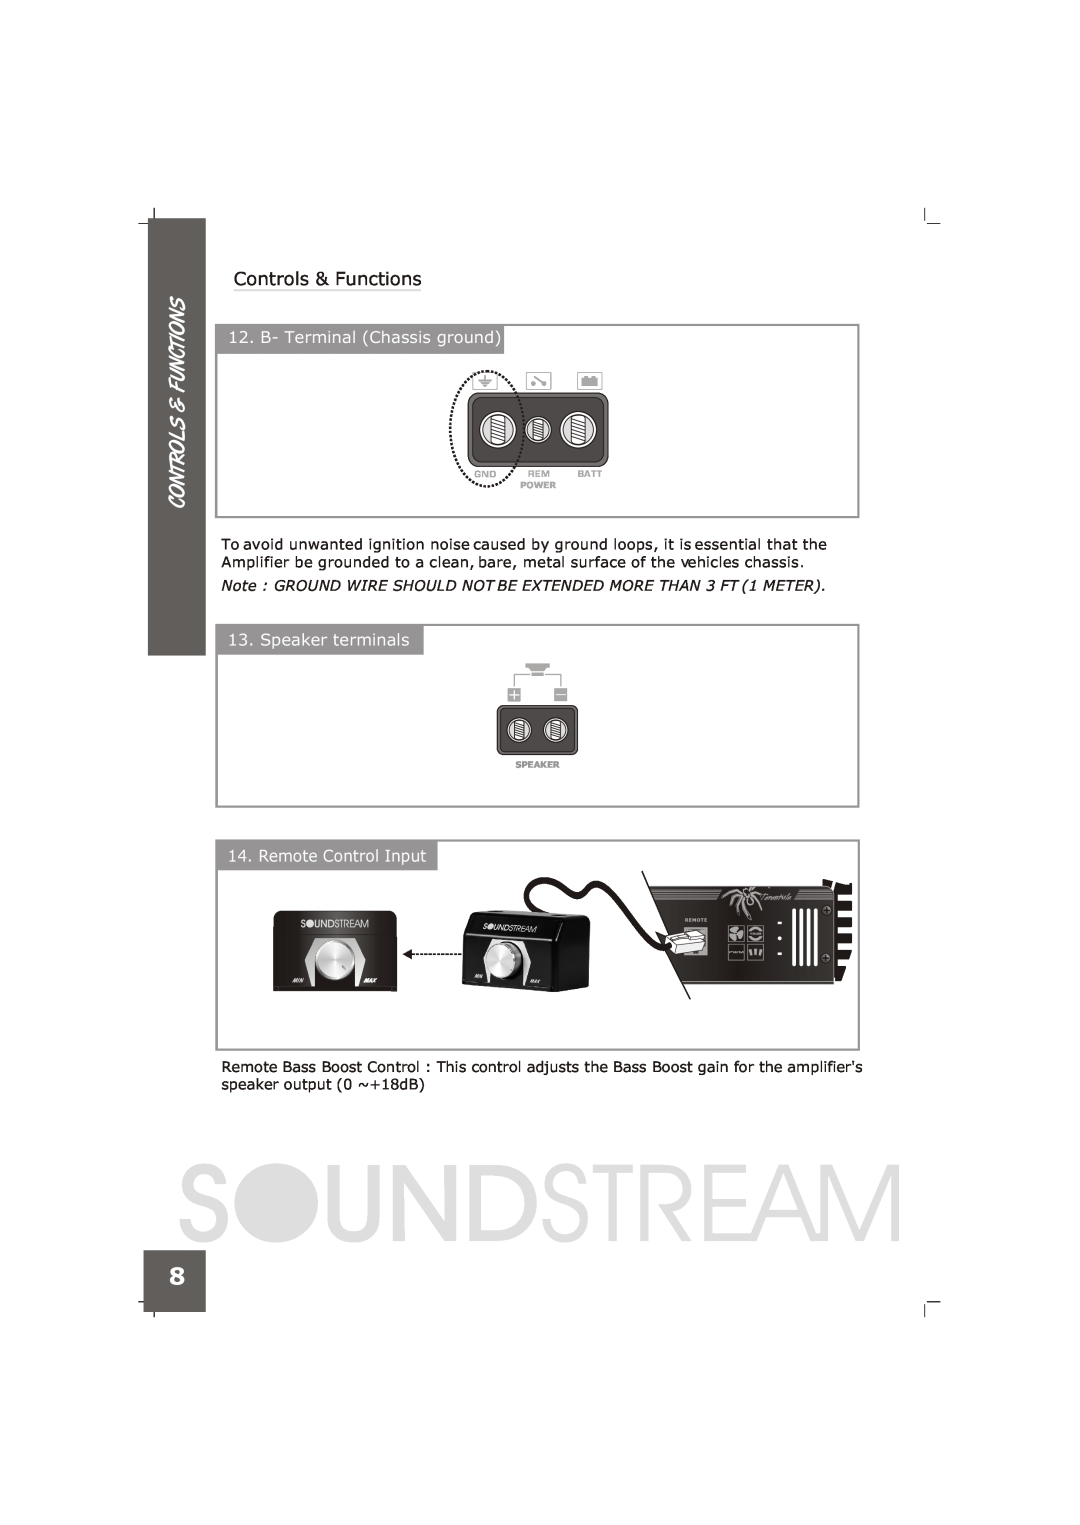 Soundstream Technologies TRX20000 Controls & Functions, B- Terminal Chassis ground, Speaker terminals, Gnd Rem Batt, Power 